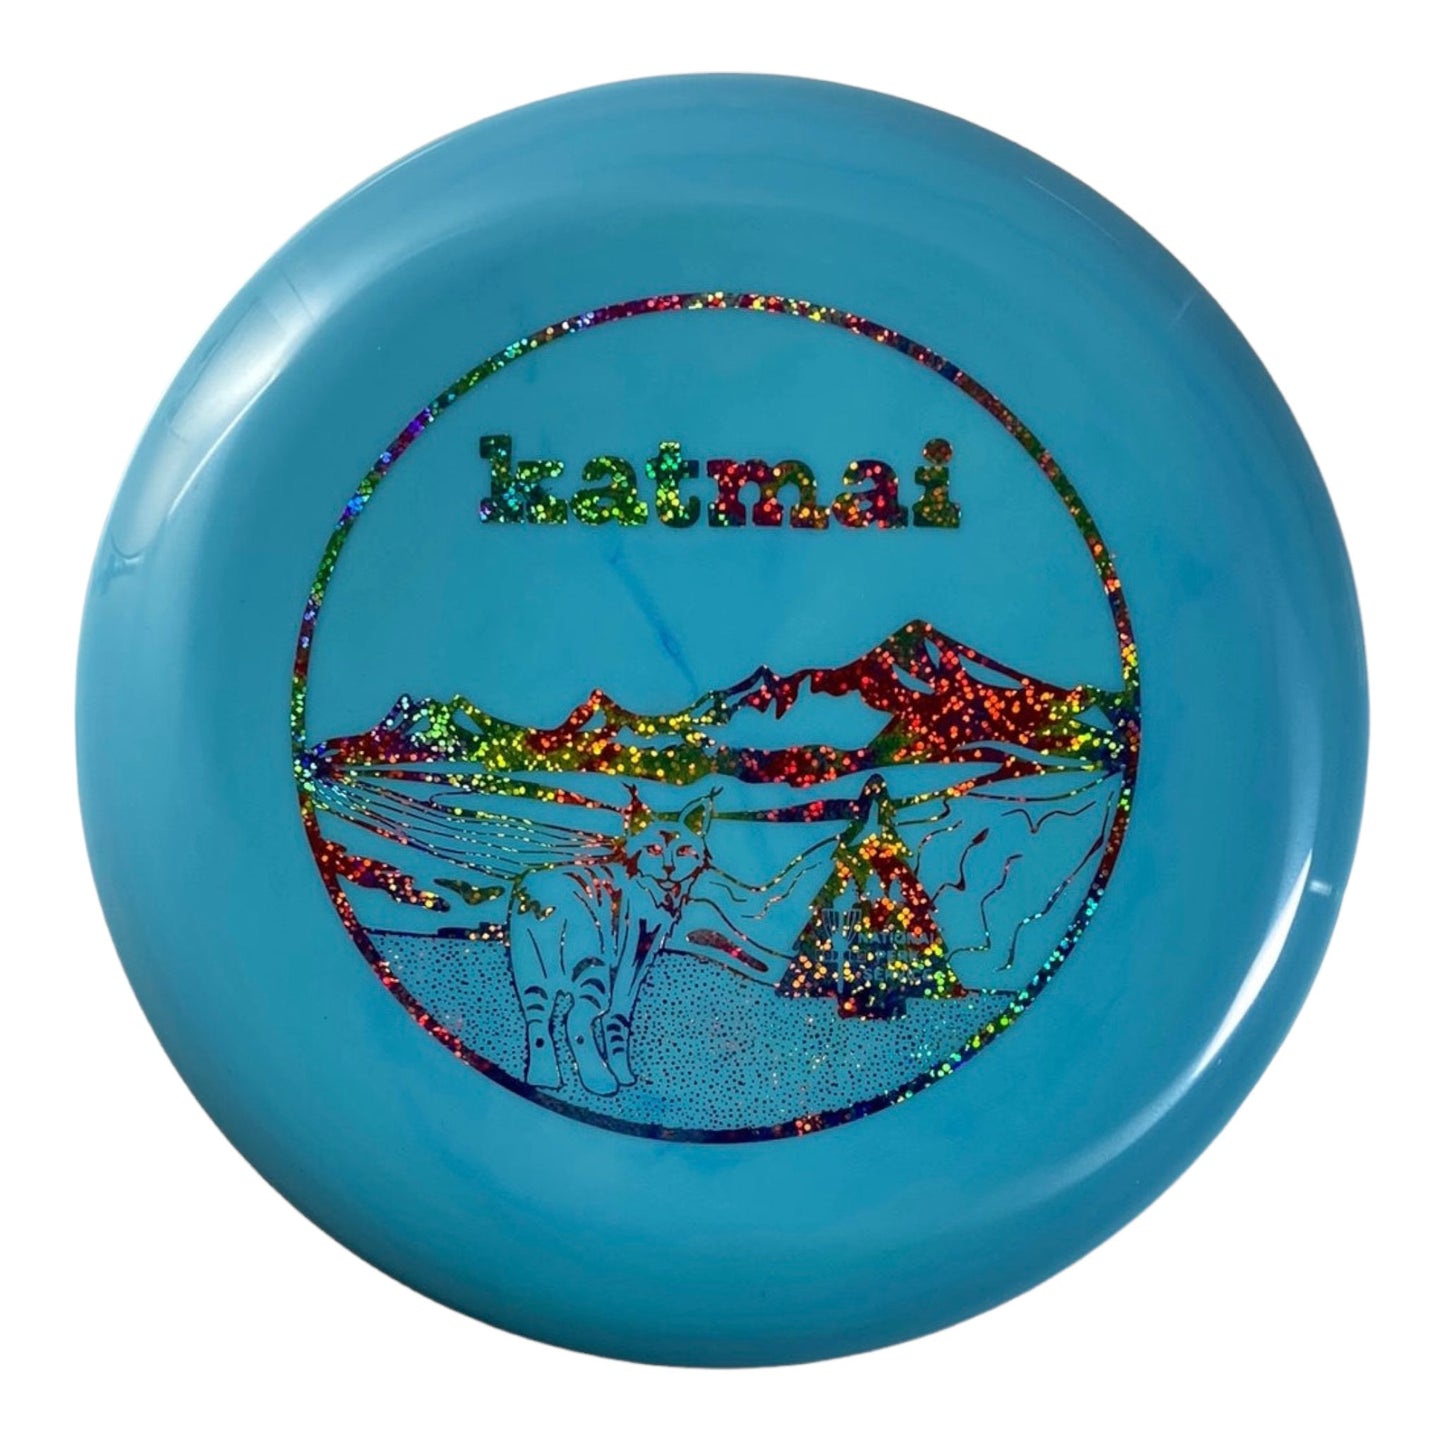 Innova Champion Discs Katmai - Aviar | Star | Blue/Partytime 172g (First Run) 22/50 Disc Golf